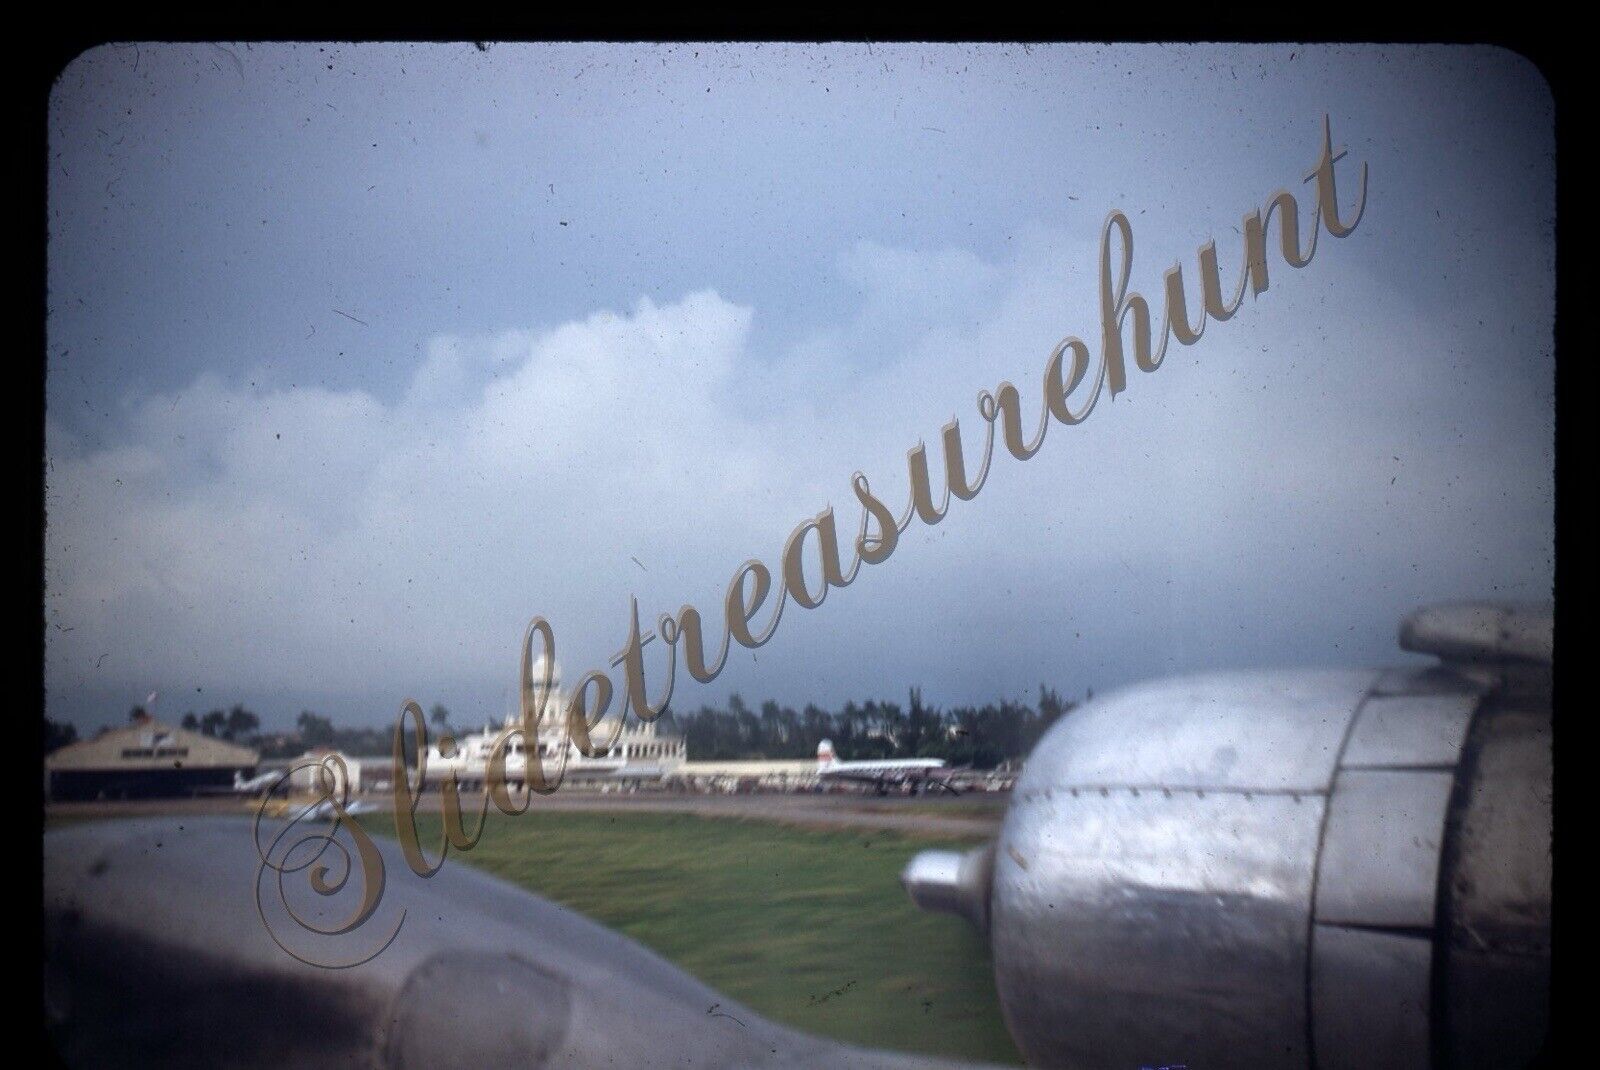 Havana Cuba Airport Aircraft Engine 35mm Slide 1950s Red Border Kodachrome